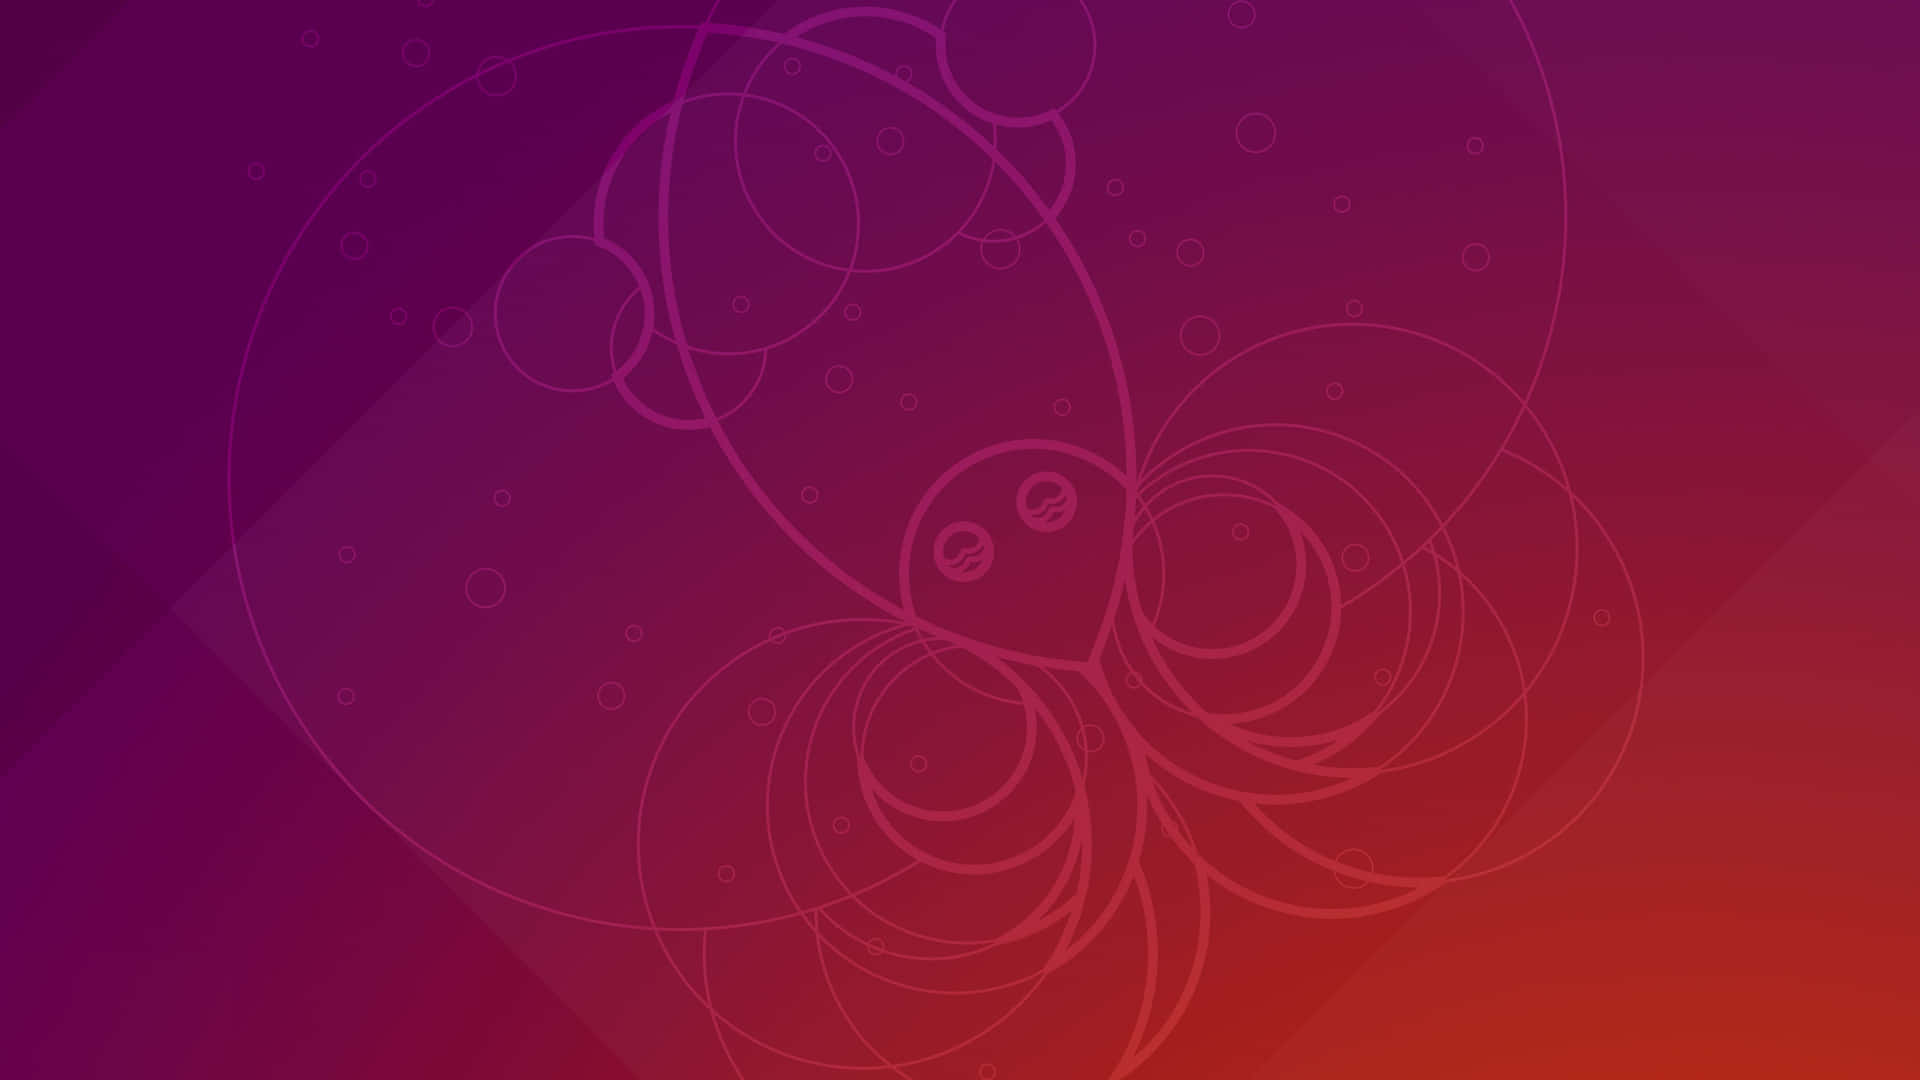 Ubuntu 4096 X 2304 Wallpaper